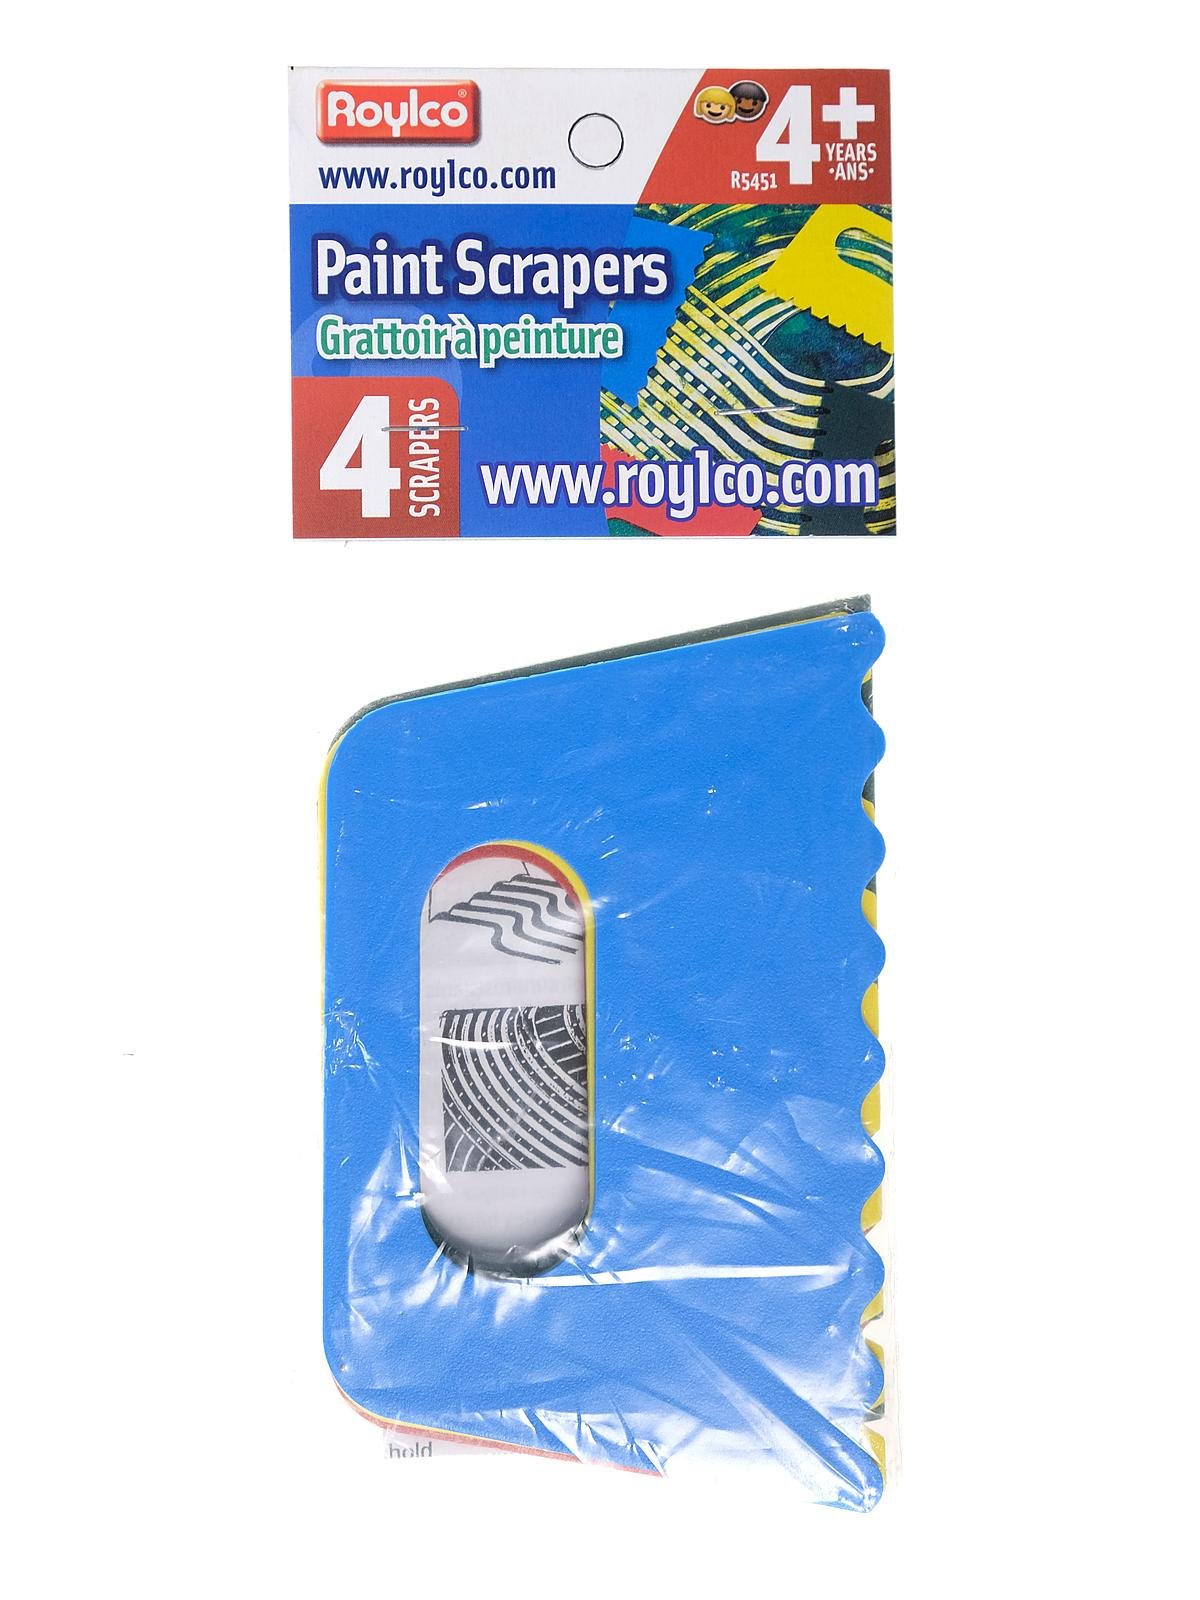 Roylco - Paint Scrapers